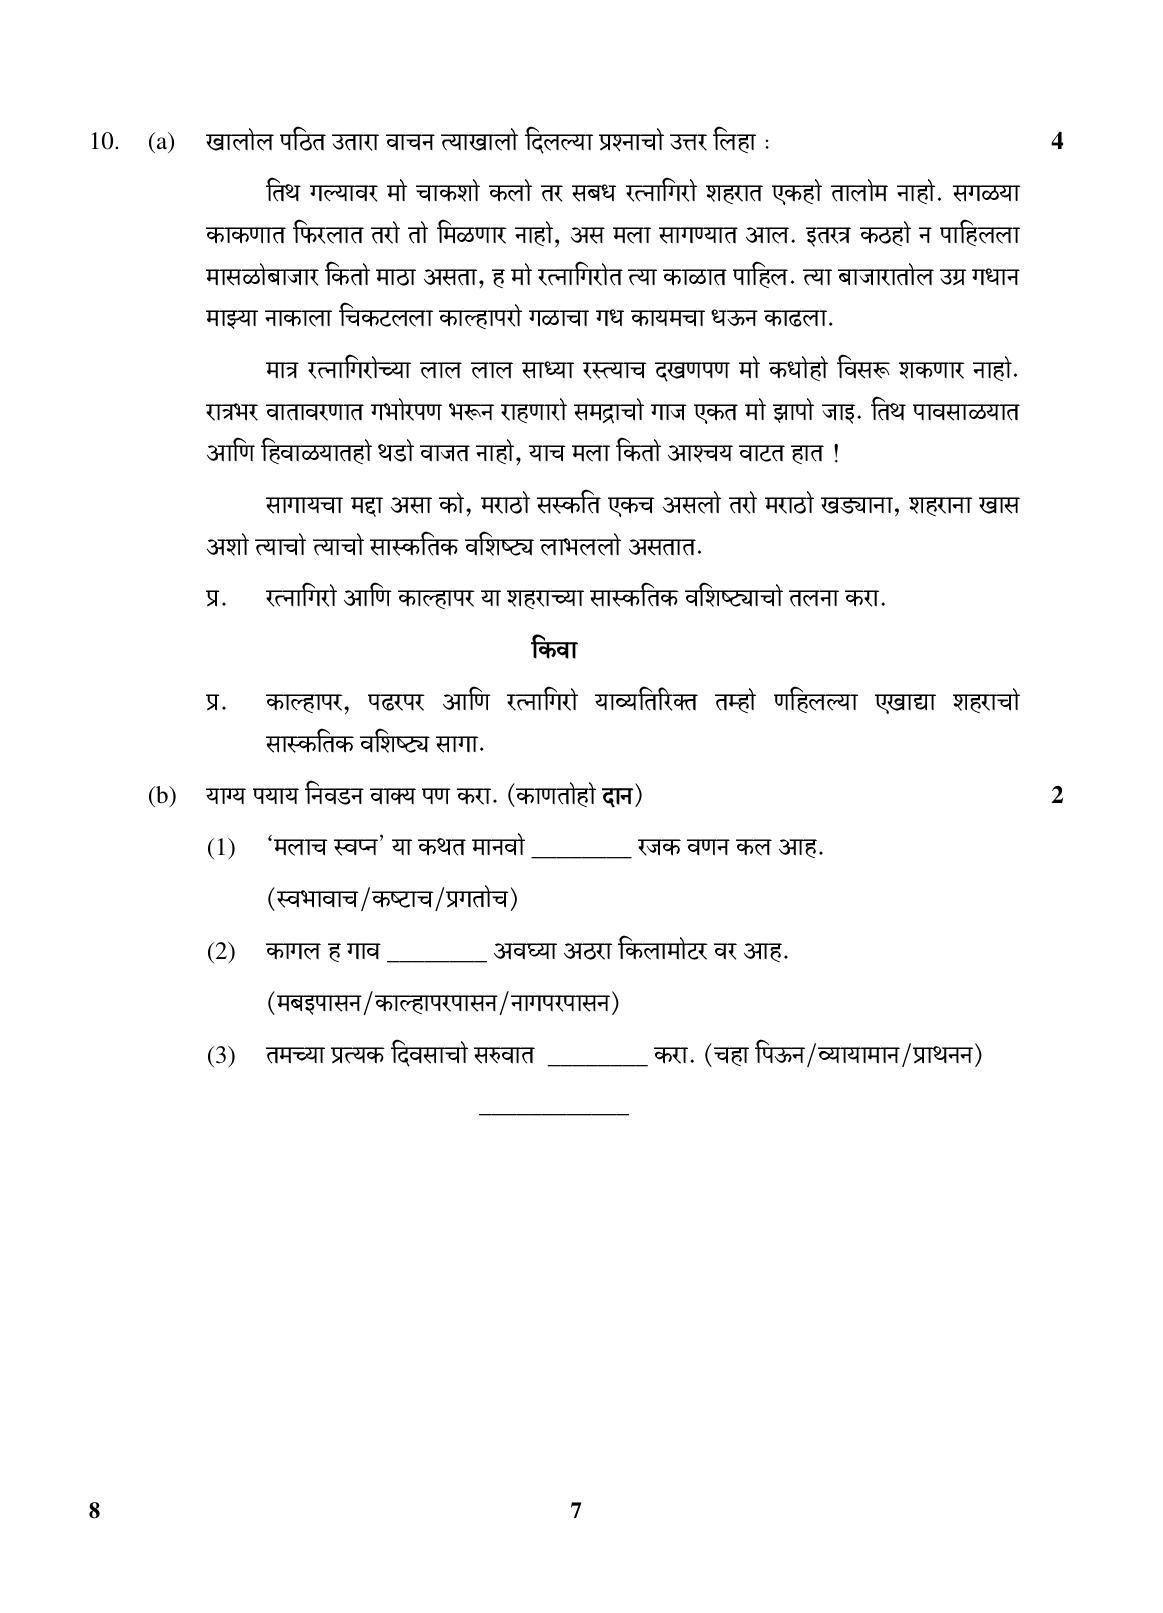 CBSE Class 10 8 (Marathi) 2018 Question Paper - Page 7